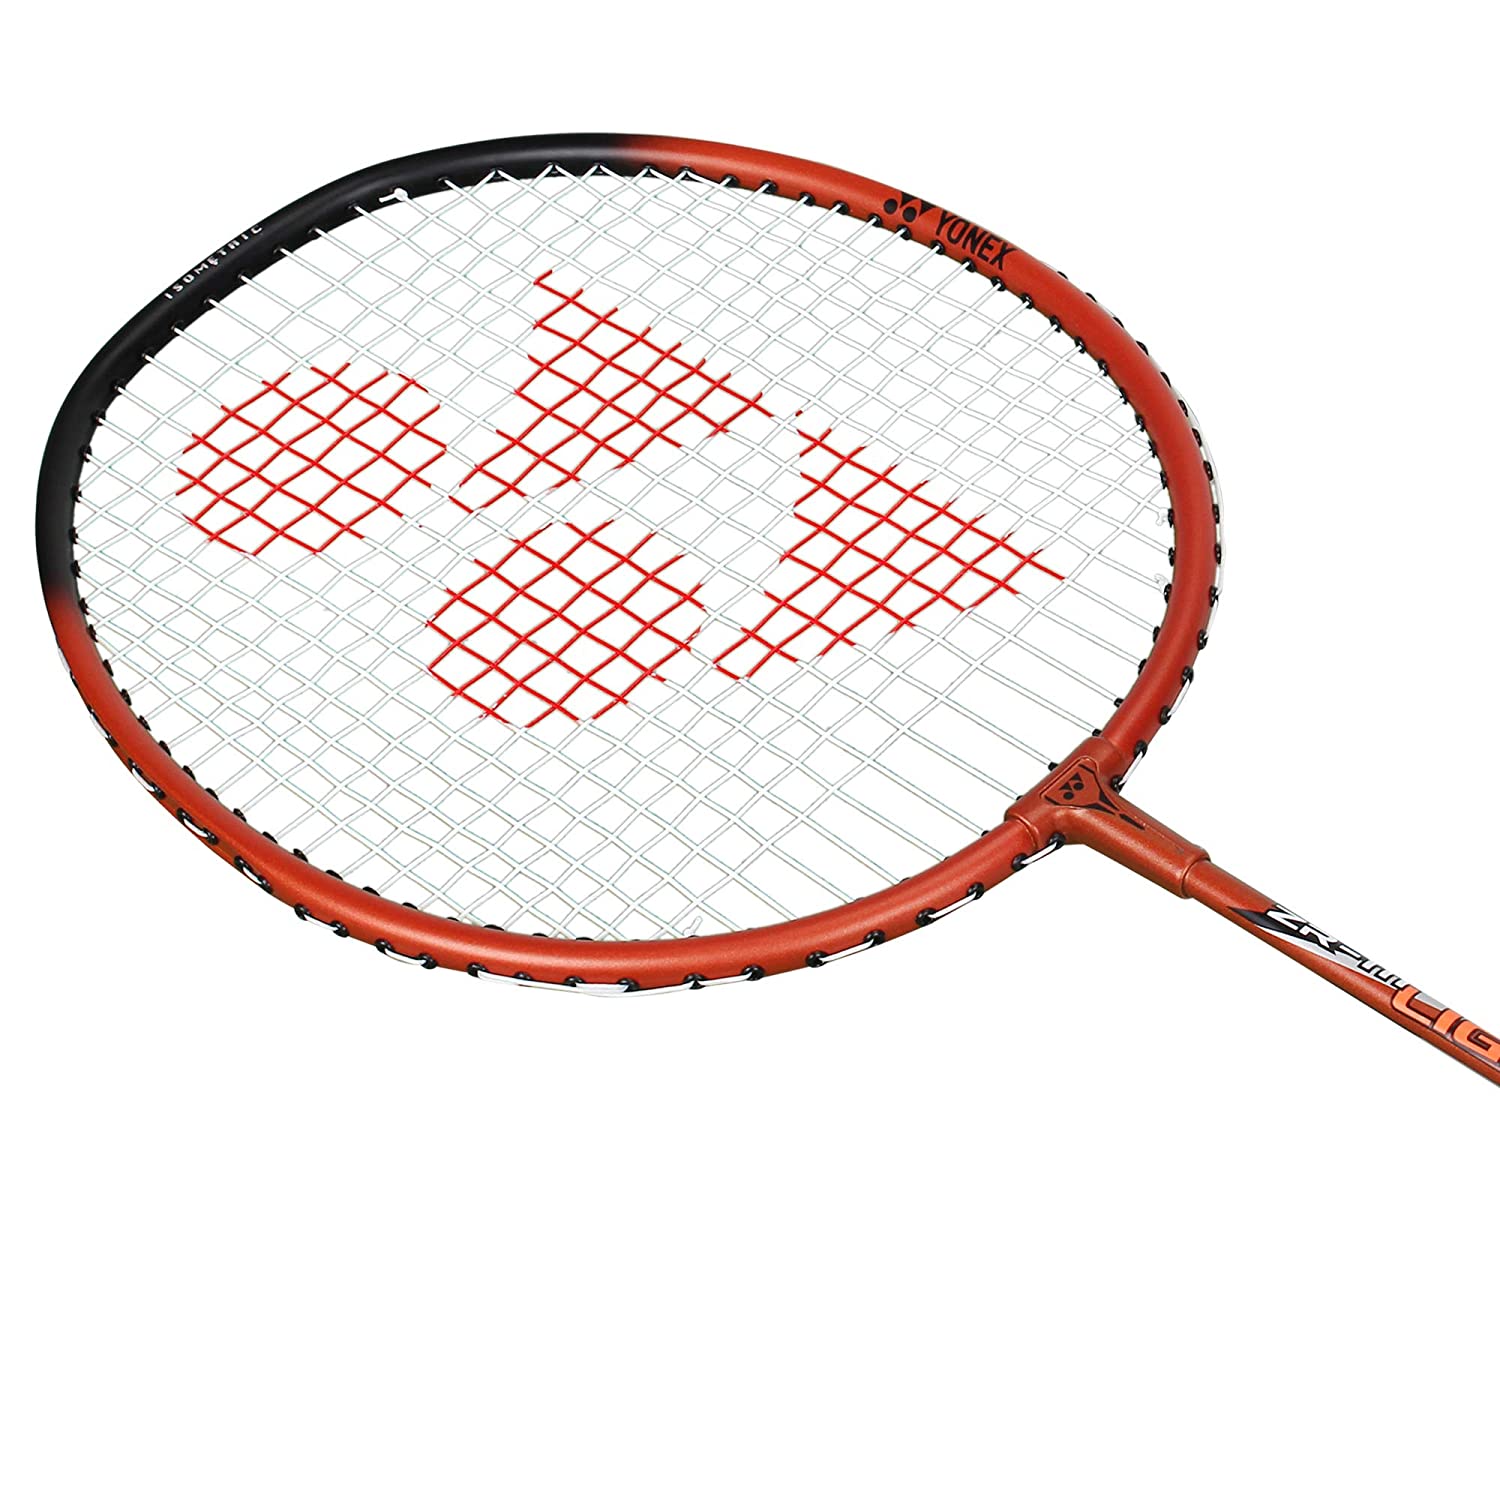 Yonex ZR 111 Light Aluminium Badminton Racket with Full Cover Made in India sppartos